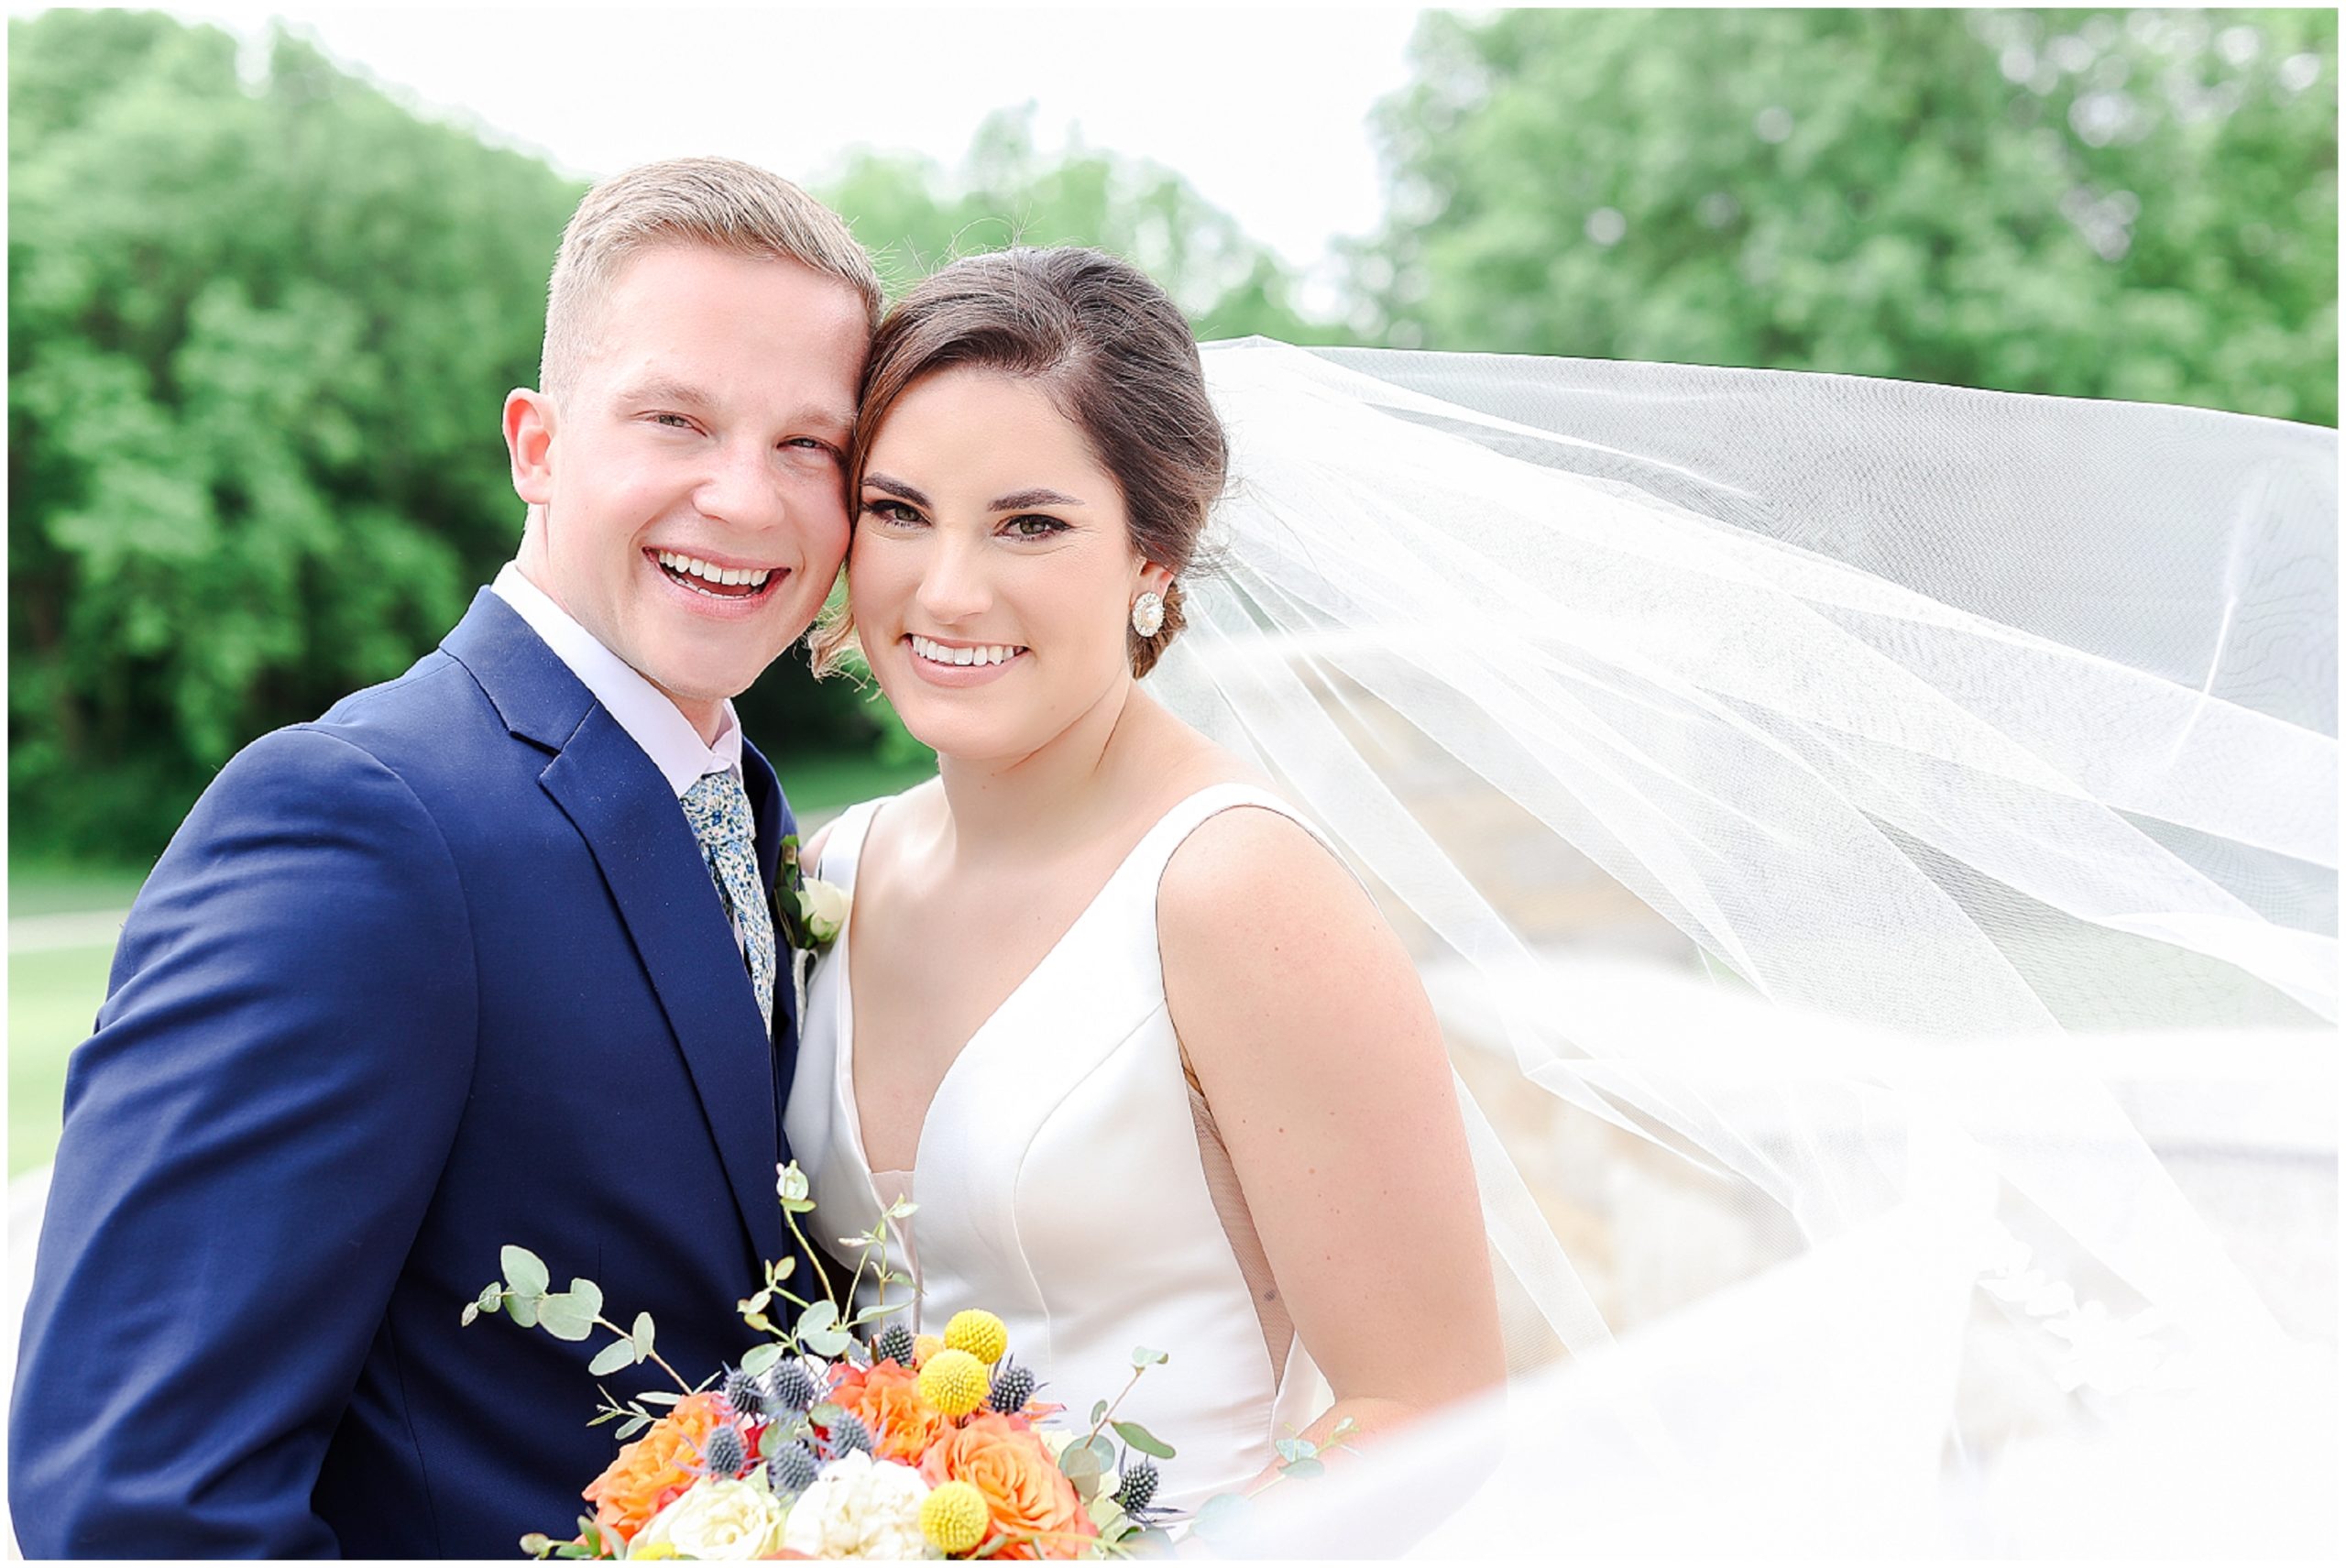 Kansas City Oakwood Country Club Wedding Venue - Wedding Photographer - Kansas City Missouri - Wedding Dress & Wedding Details - Happy Couple